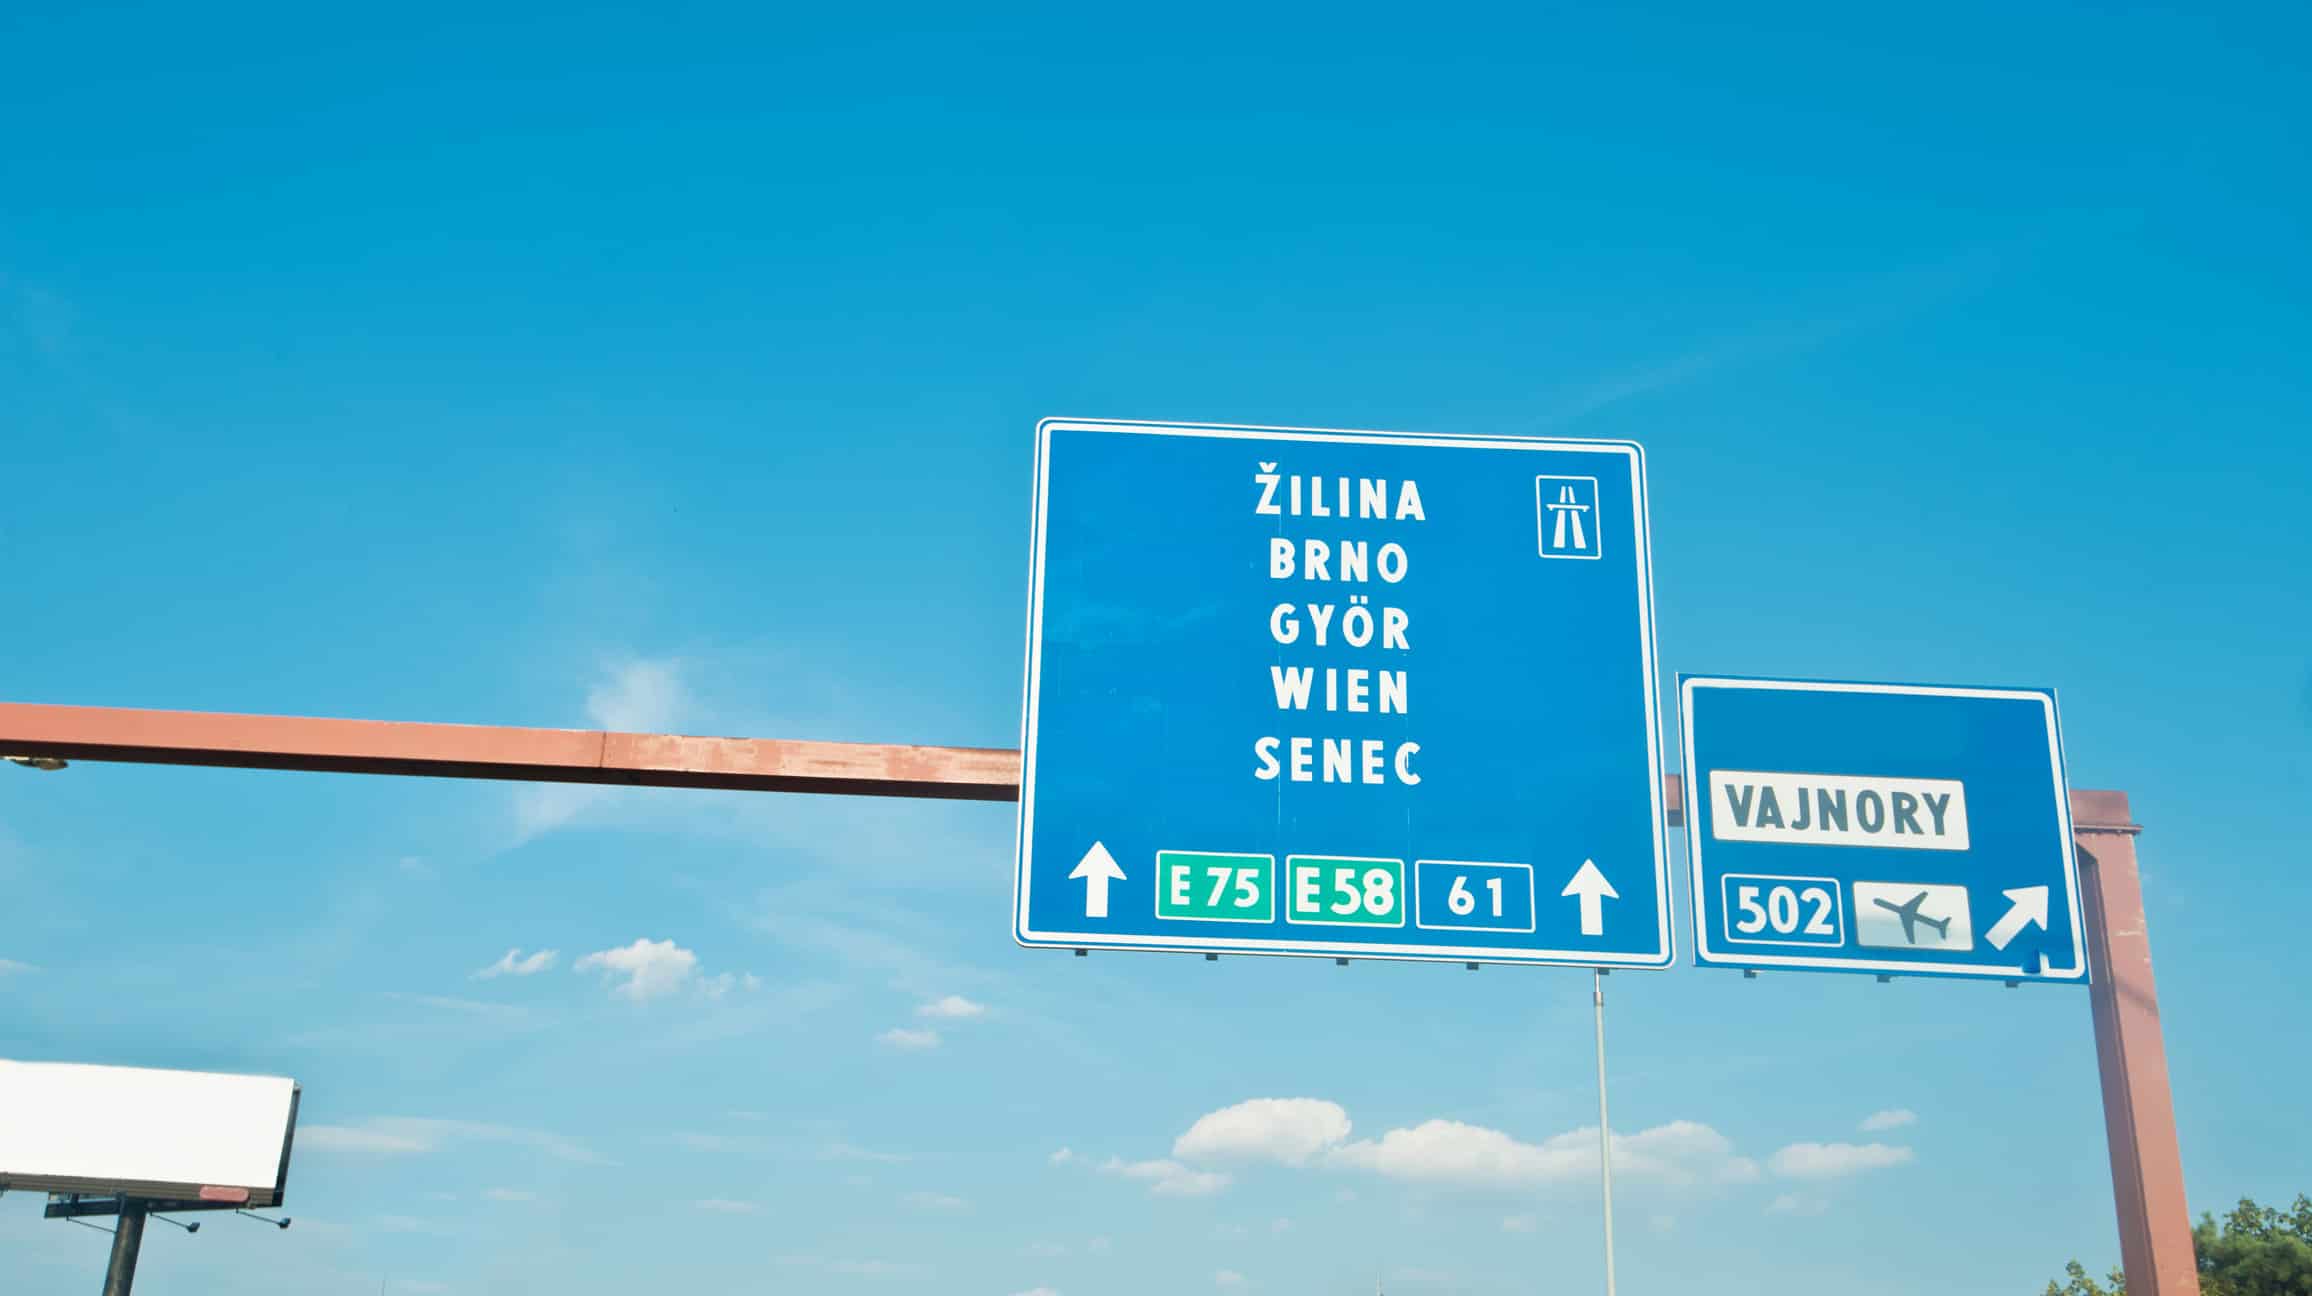 Slovakia Motorway Road Sign To Gyon - Hungary, Brno - Czech Rep, Vienna - Austria, Zilina and Senec (Slovakia) And Airport